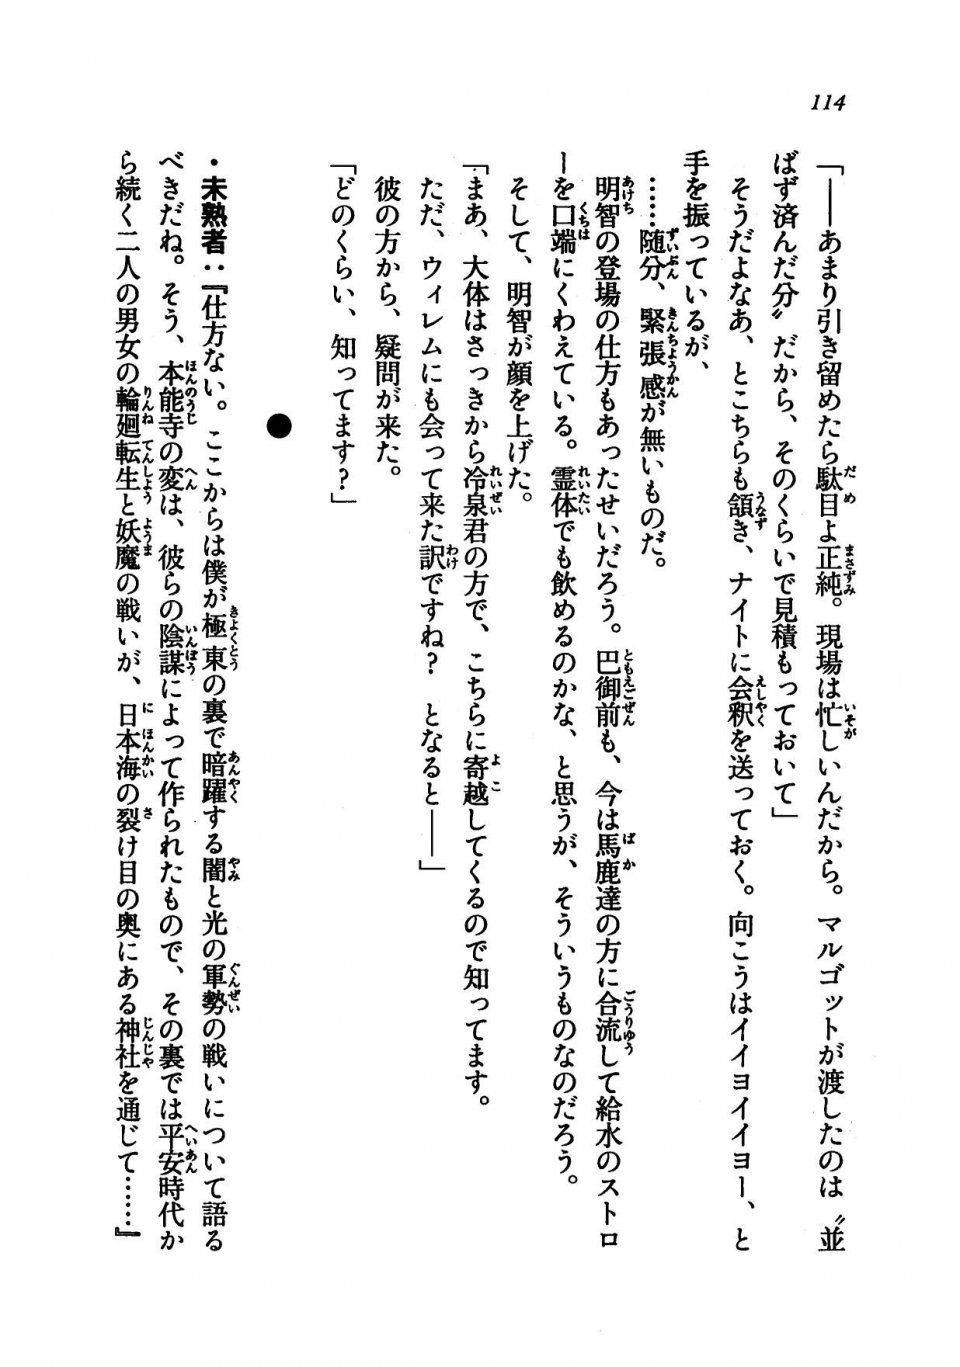 Kyoukai Senjou no Horizon LN Vol 21(8C) Part 1 - Photo #113